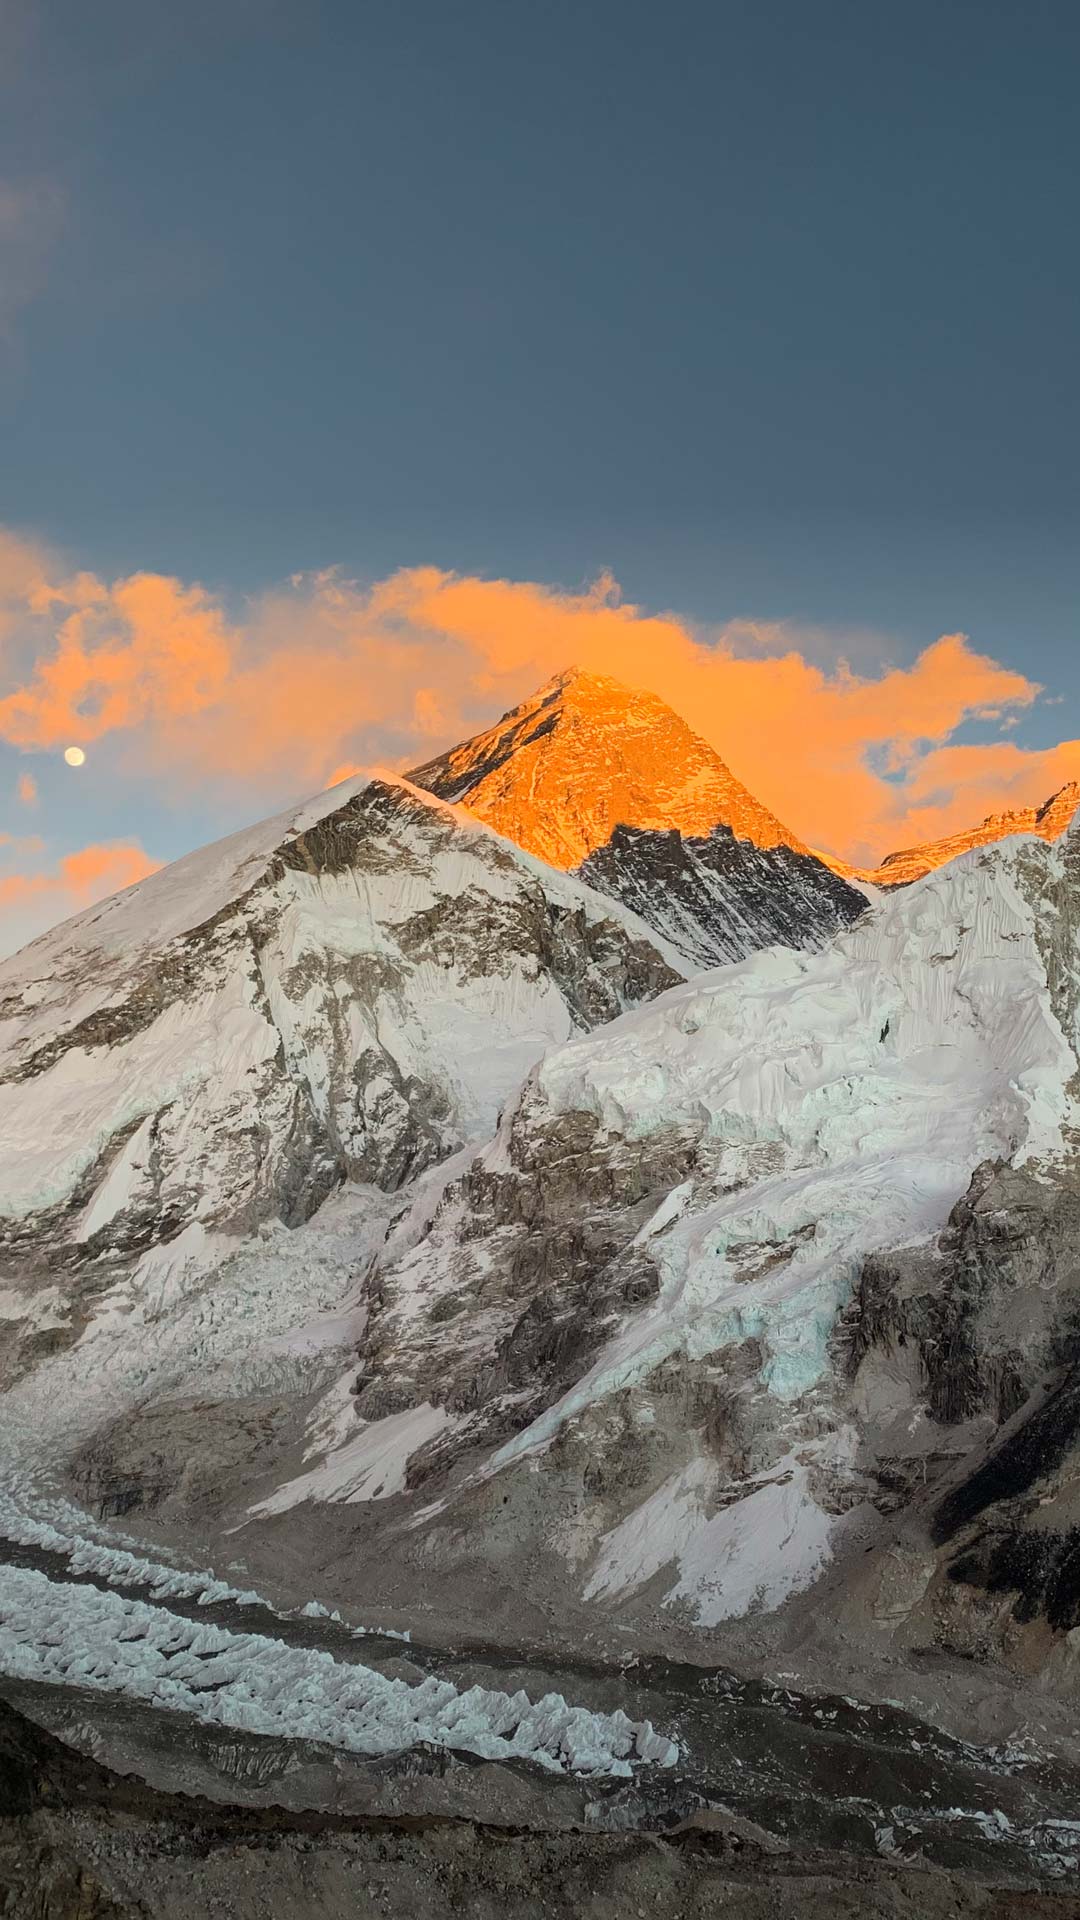 Mount Everest from Kala Patthar